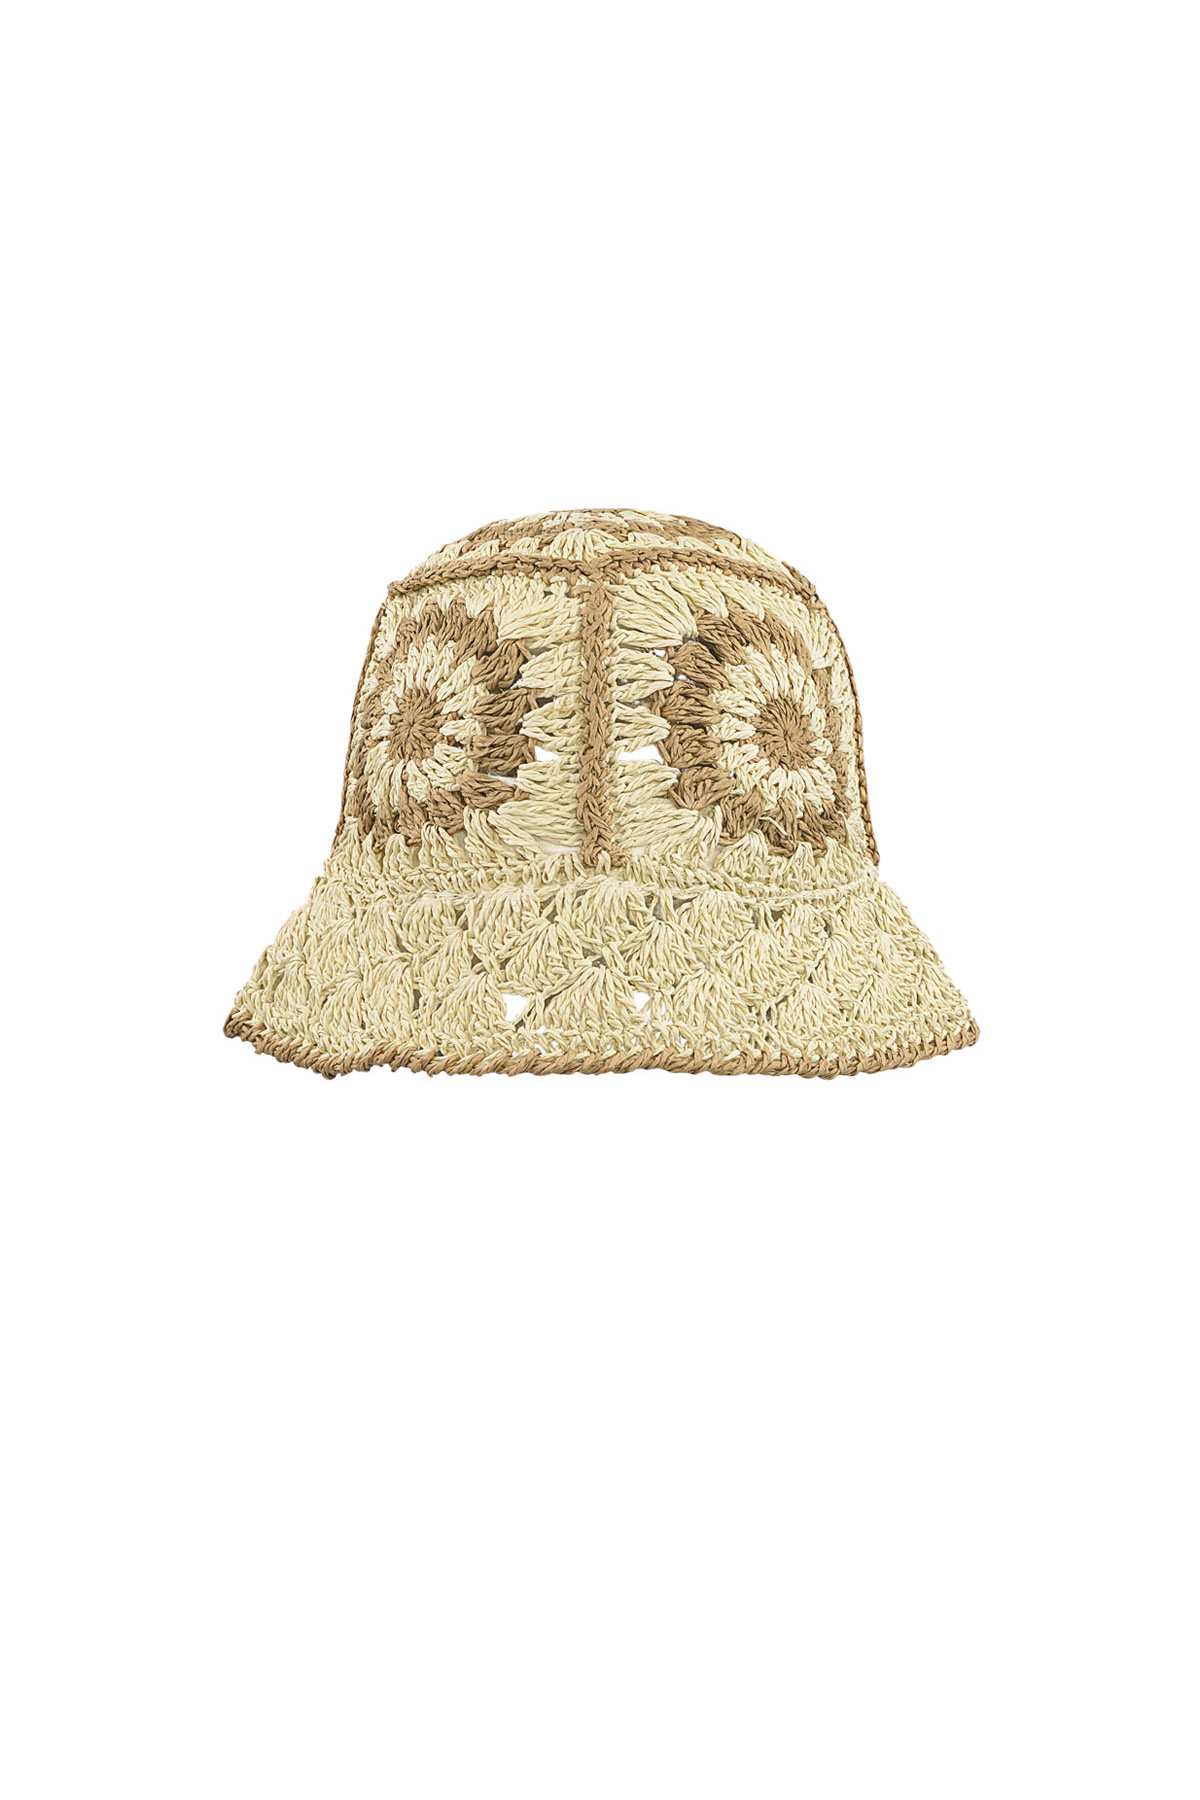 Crochet hat with flowers - beige h5 